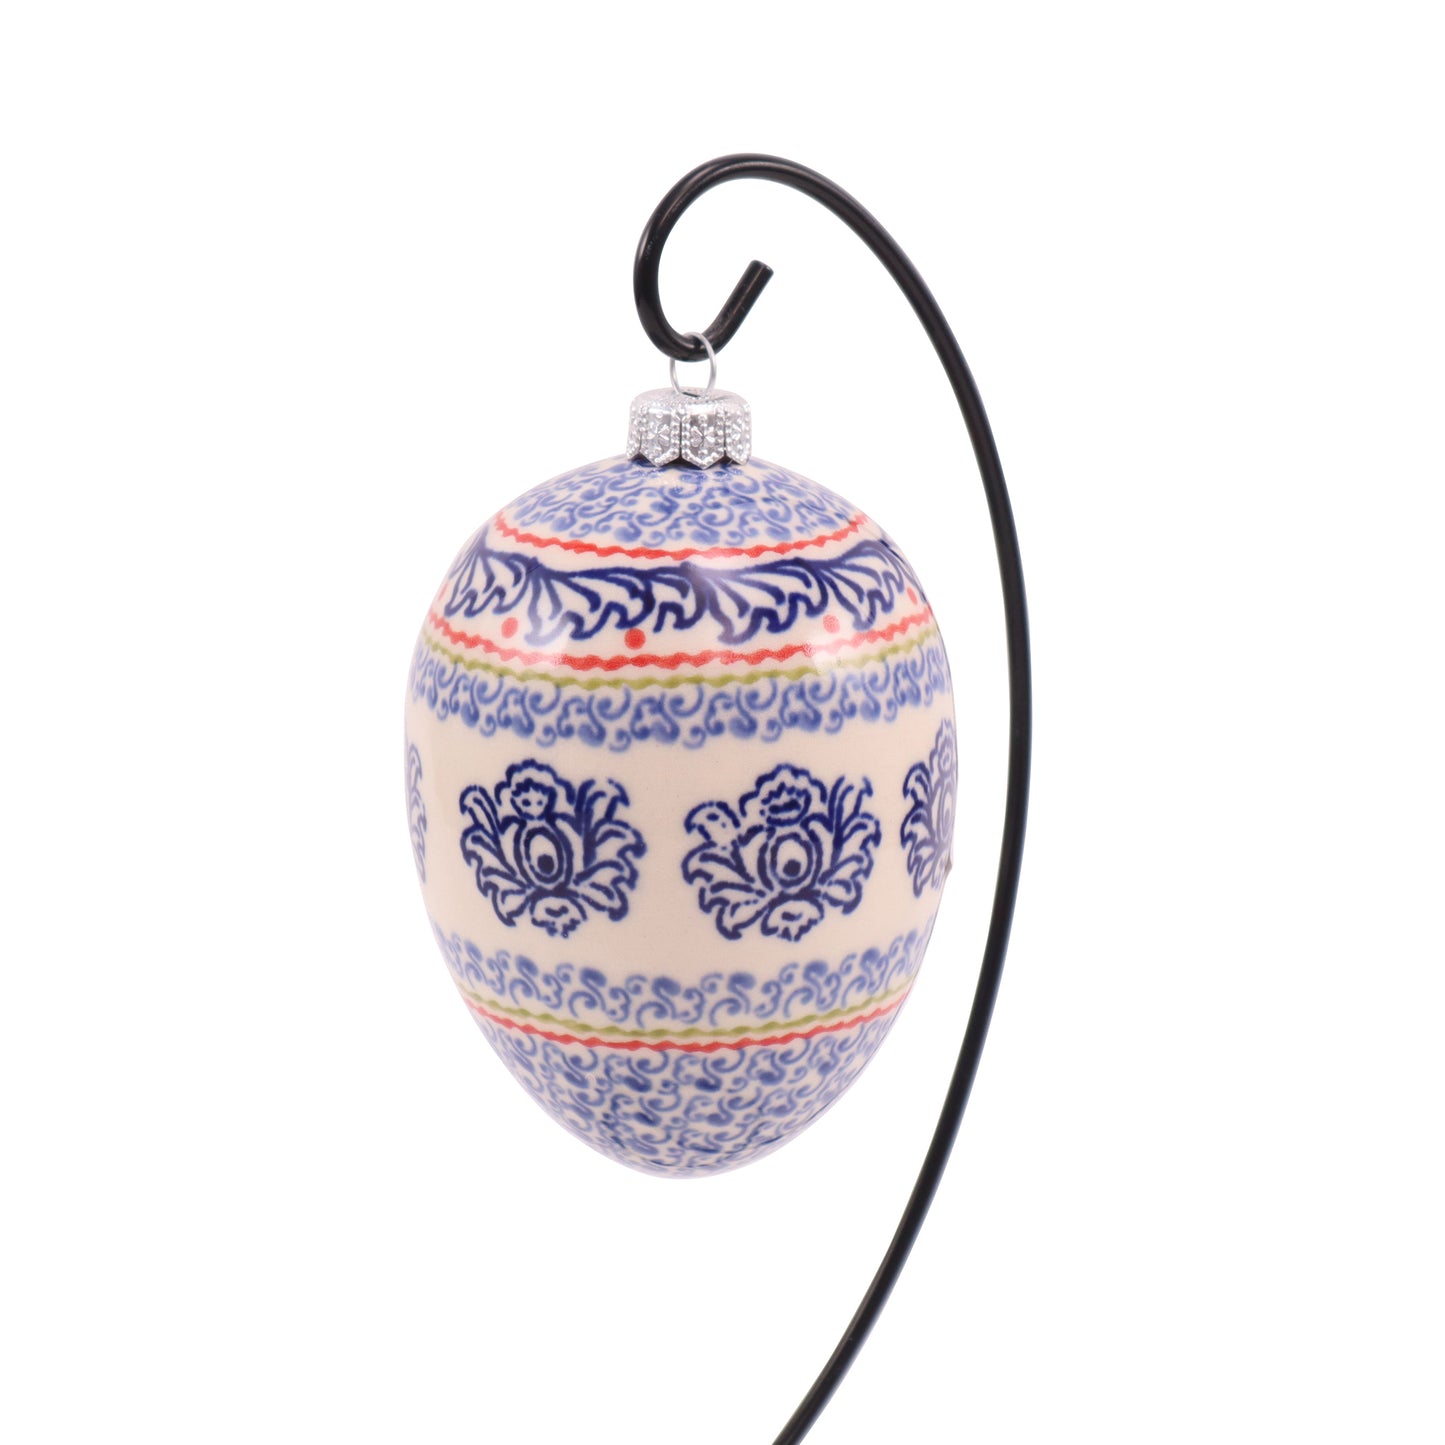 3"x4" Egg Ornament. Pattern: Blue Lace